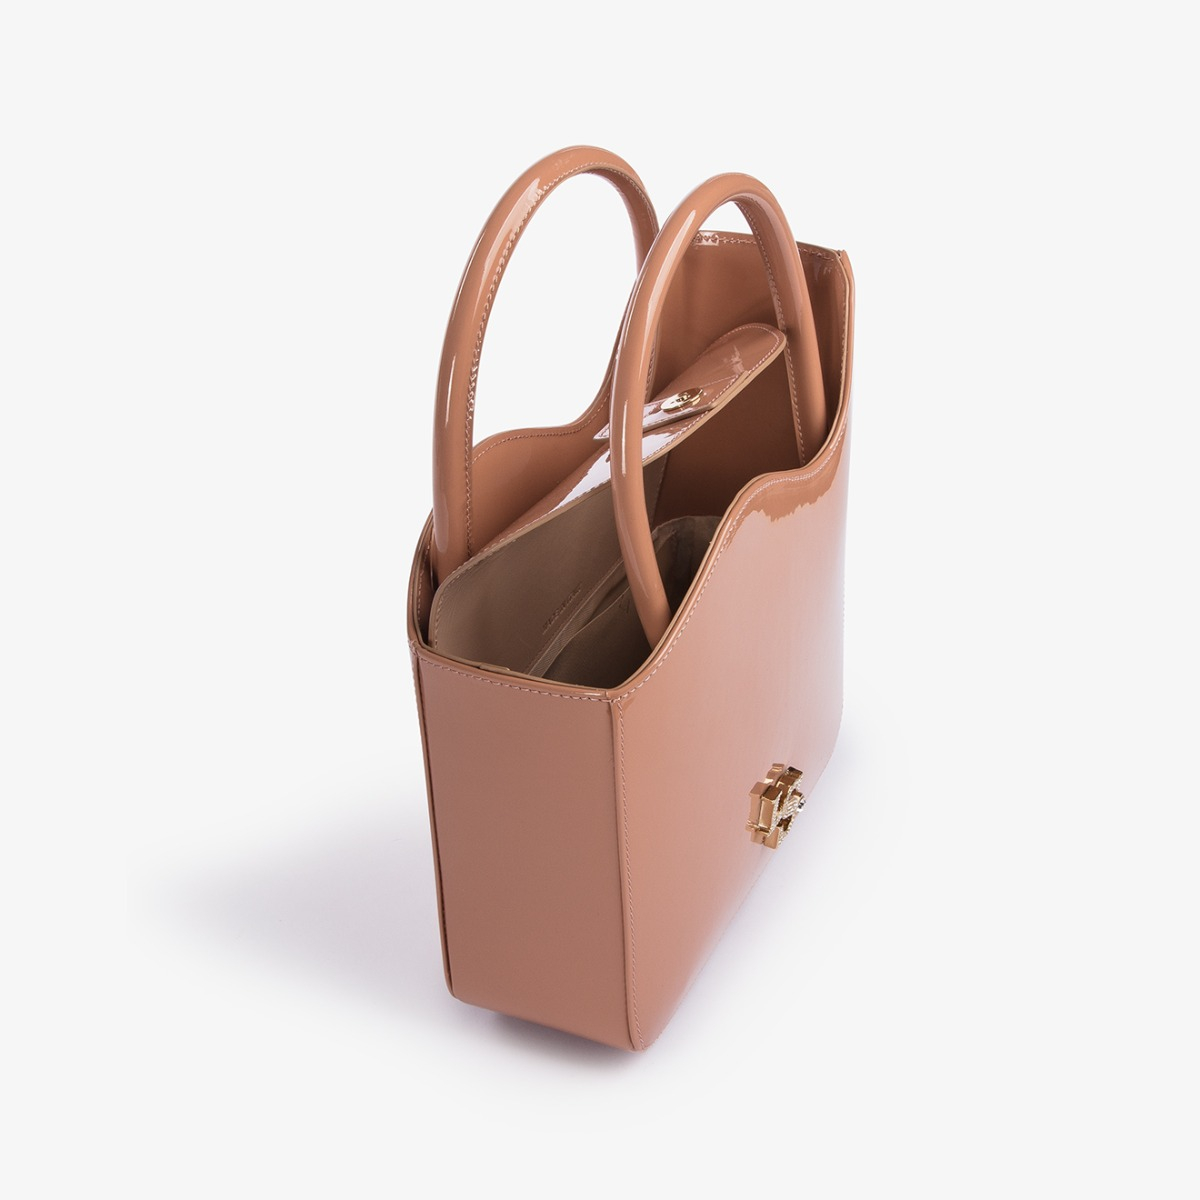 BAG IVY - Le Silla | Official Online Store